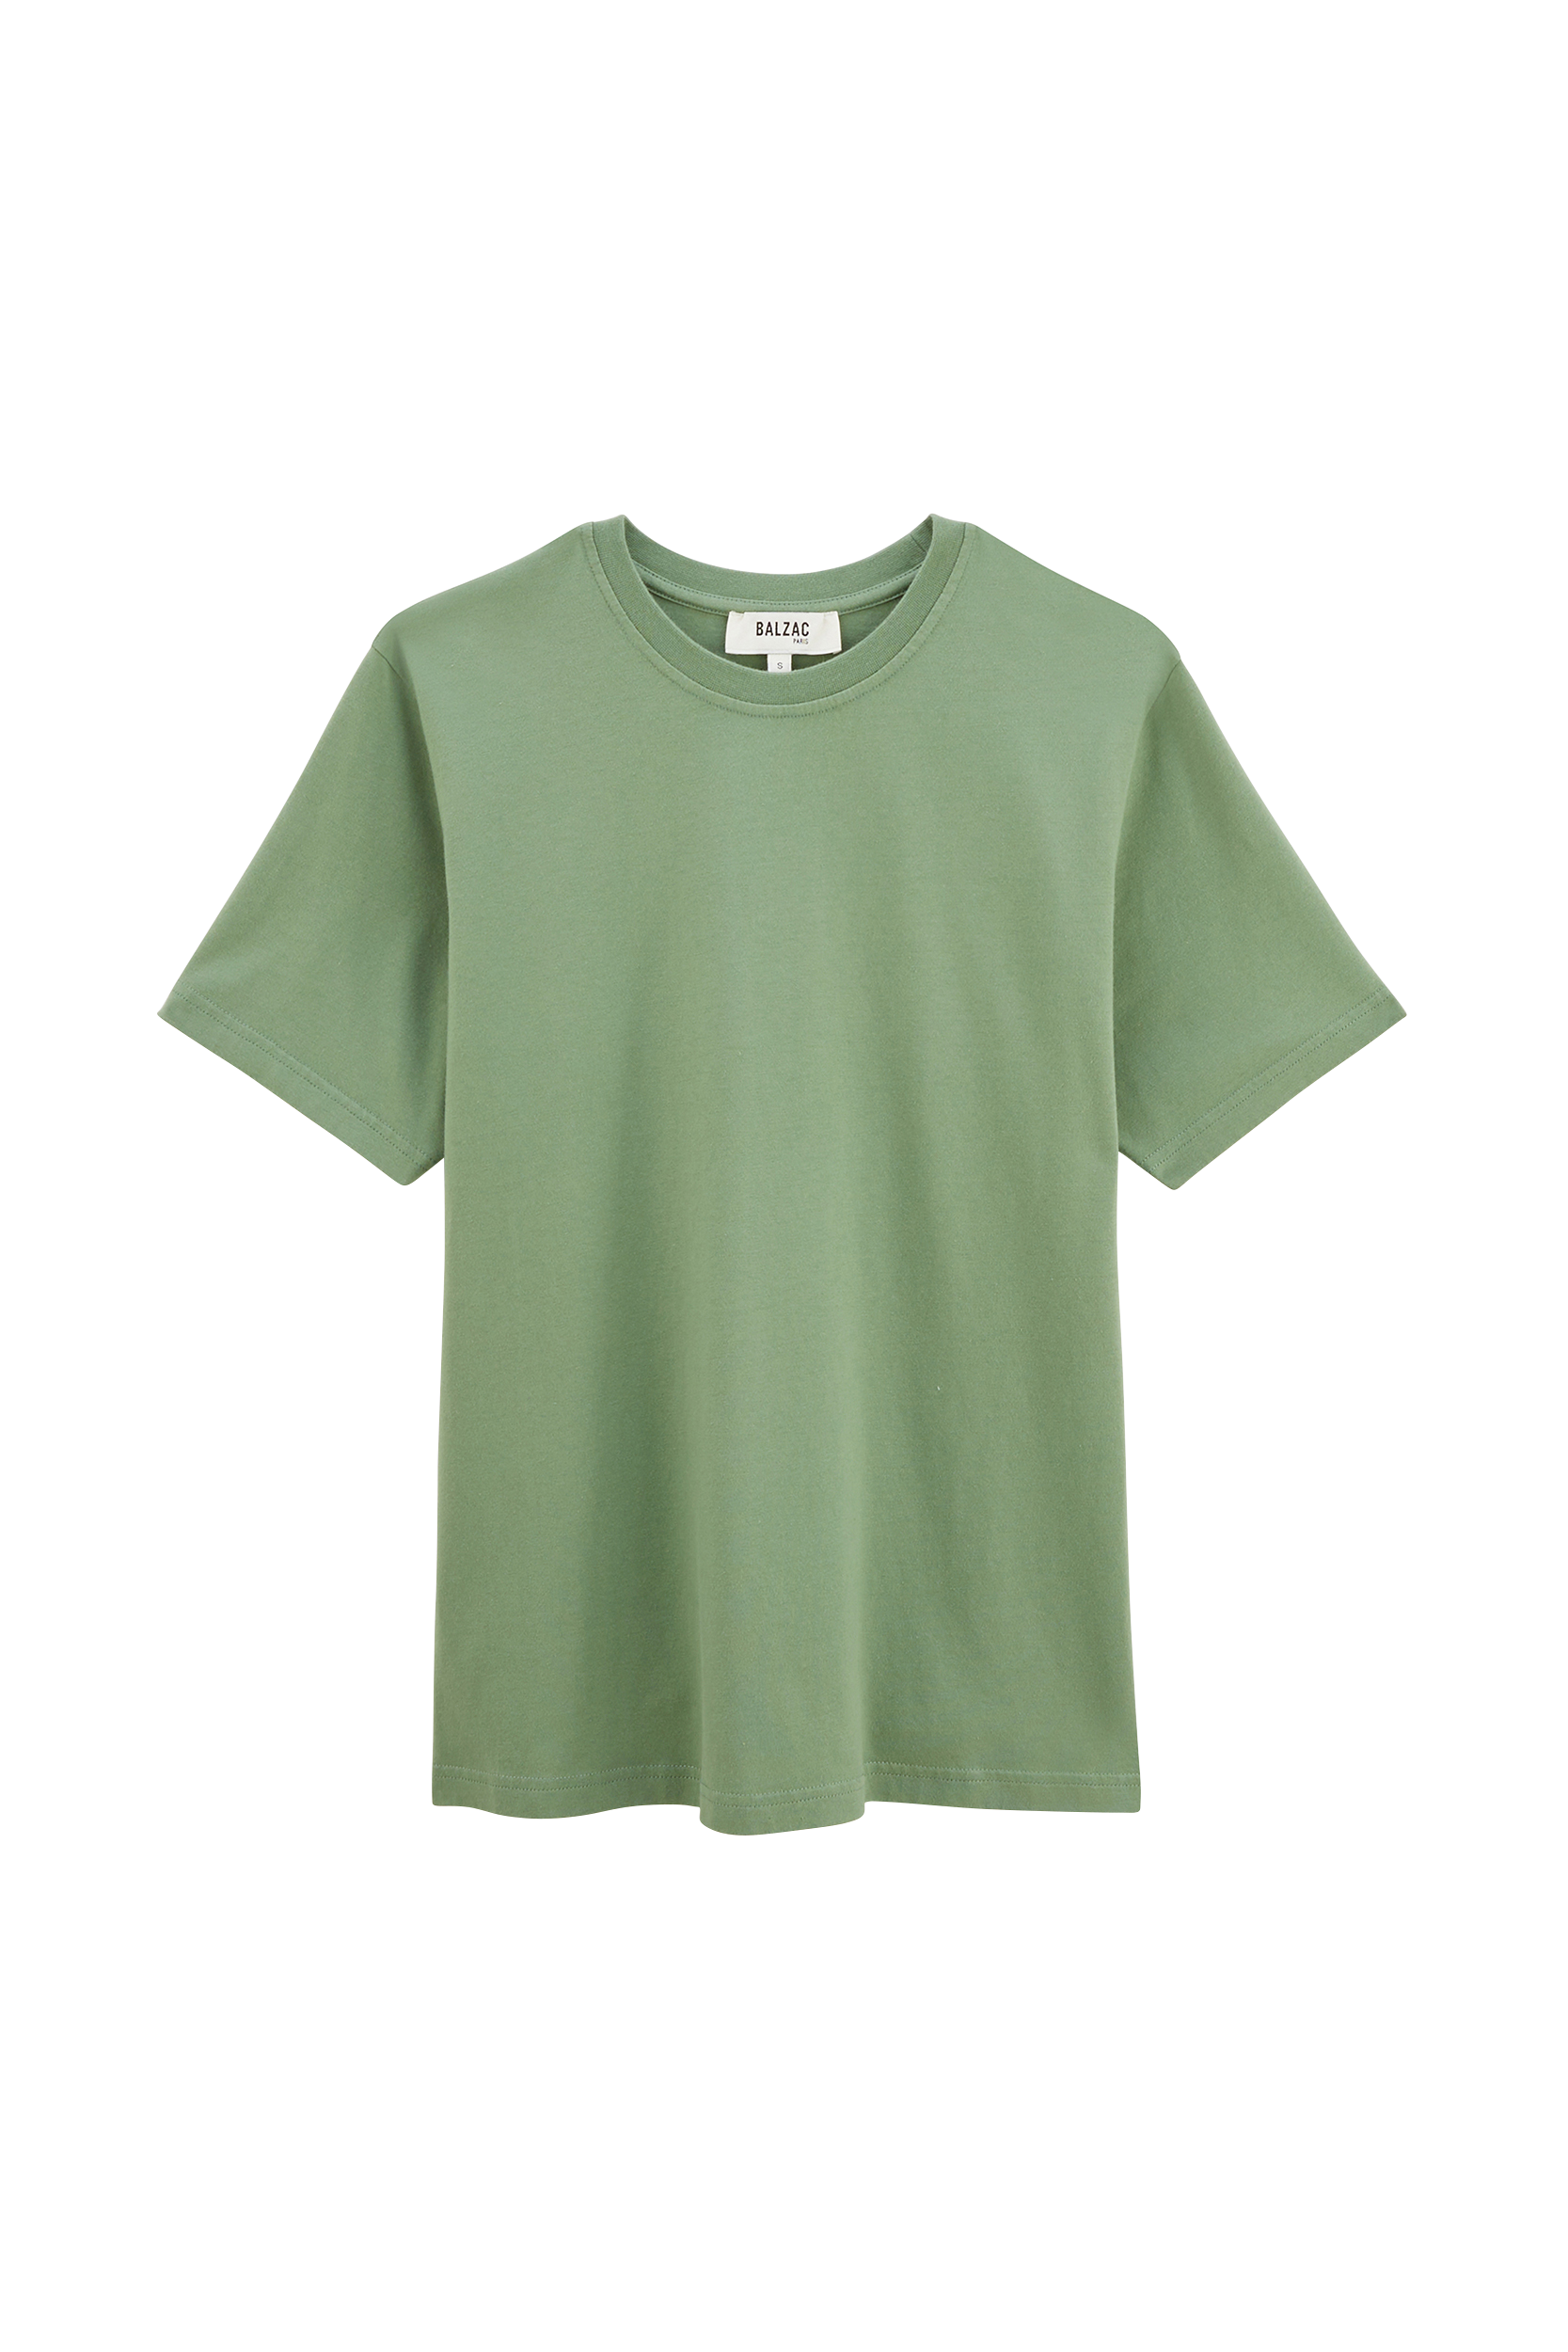 Tee-shirt Bree vert sauge